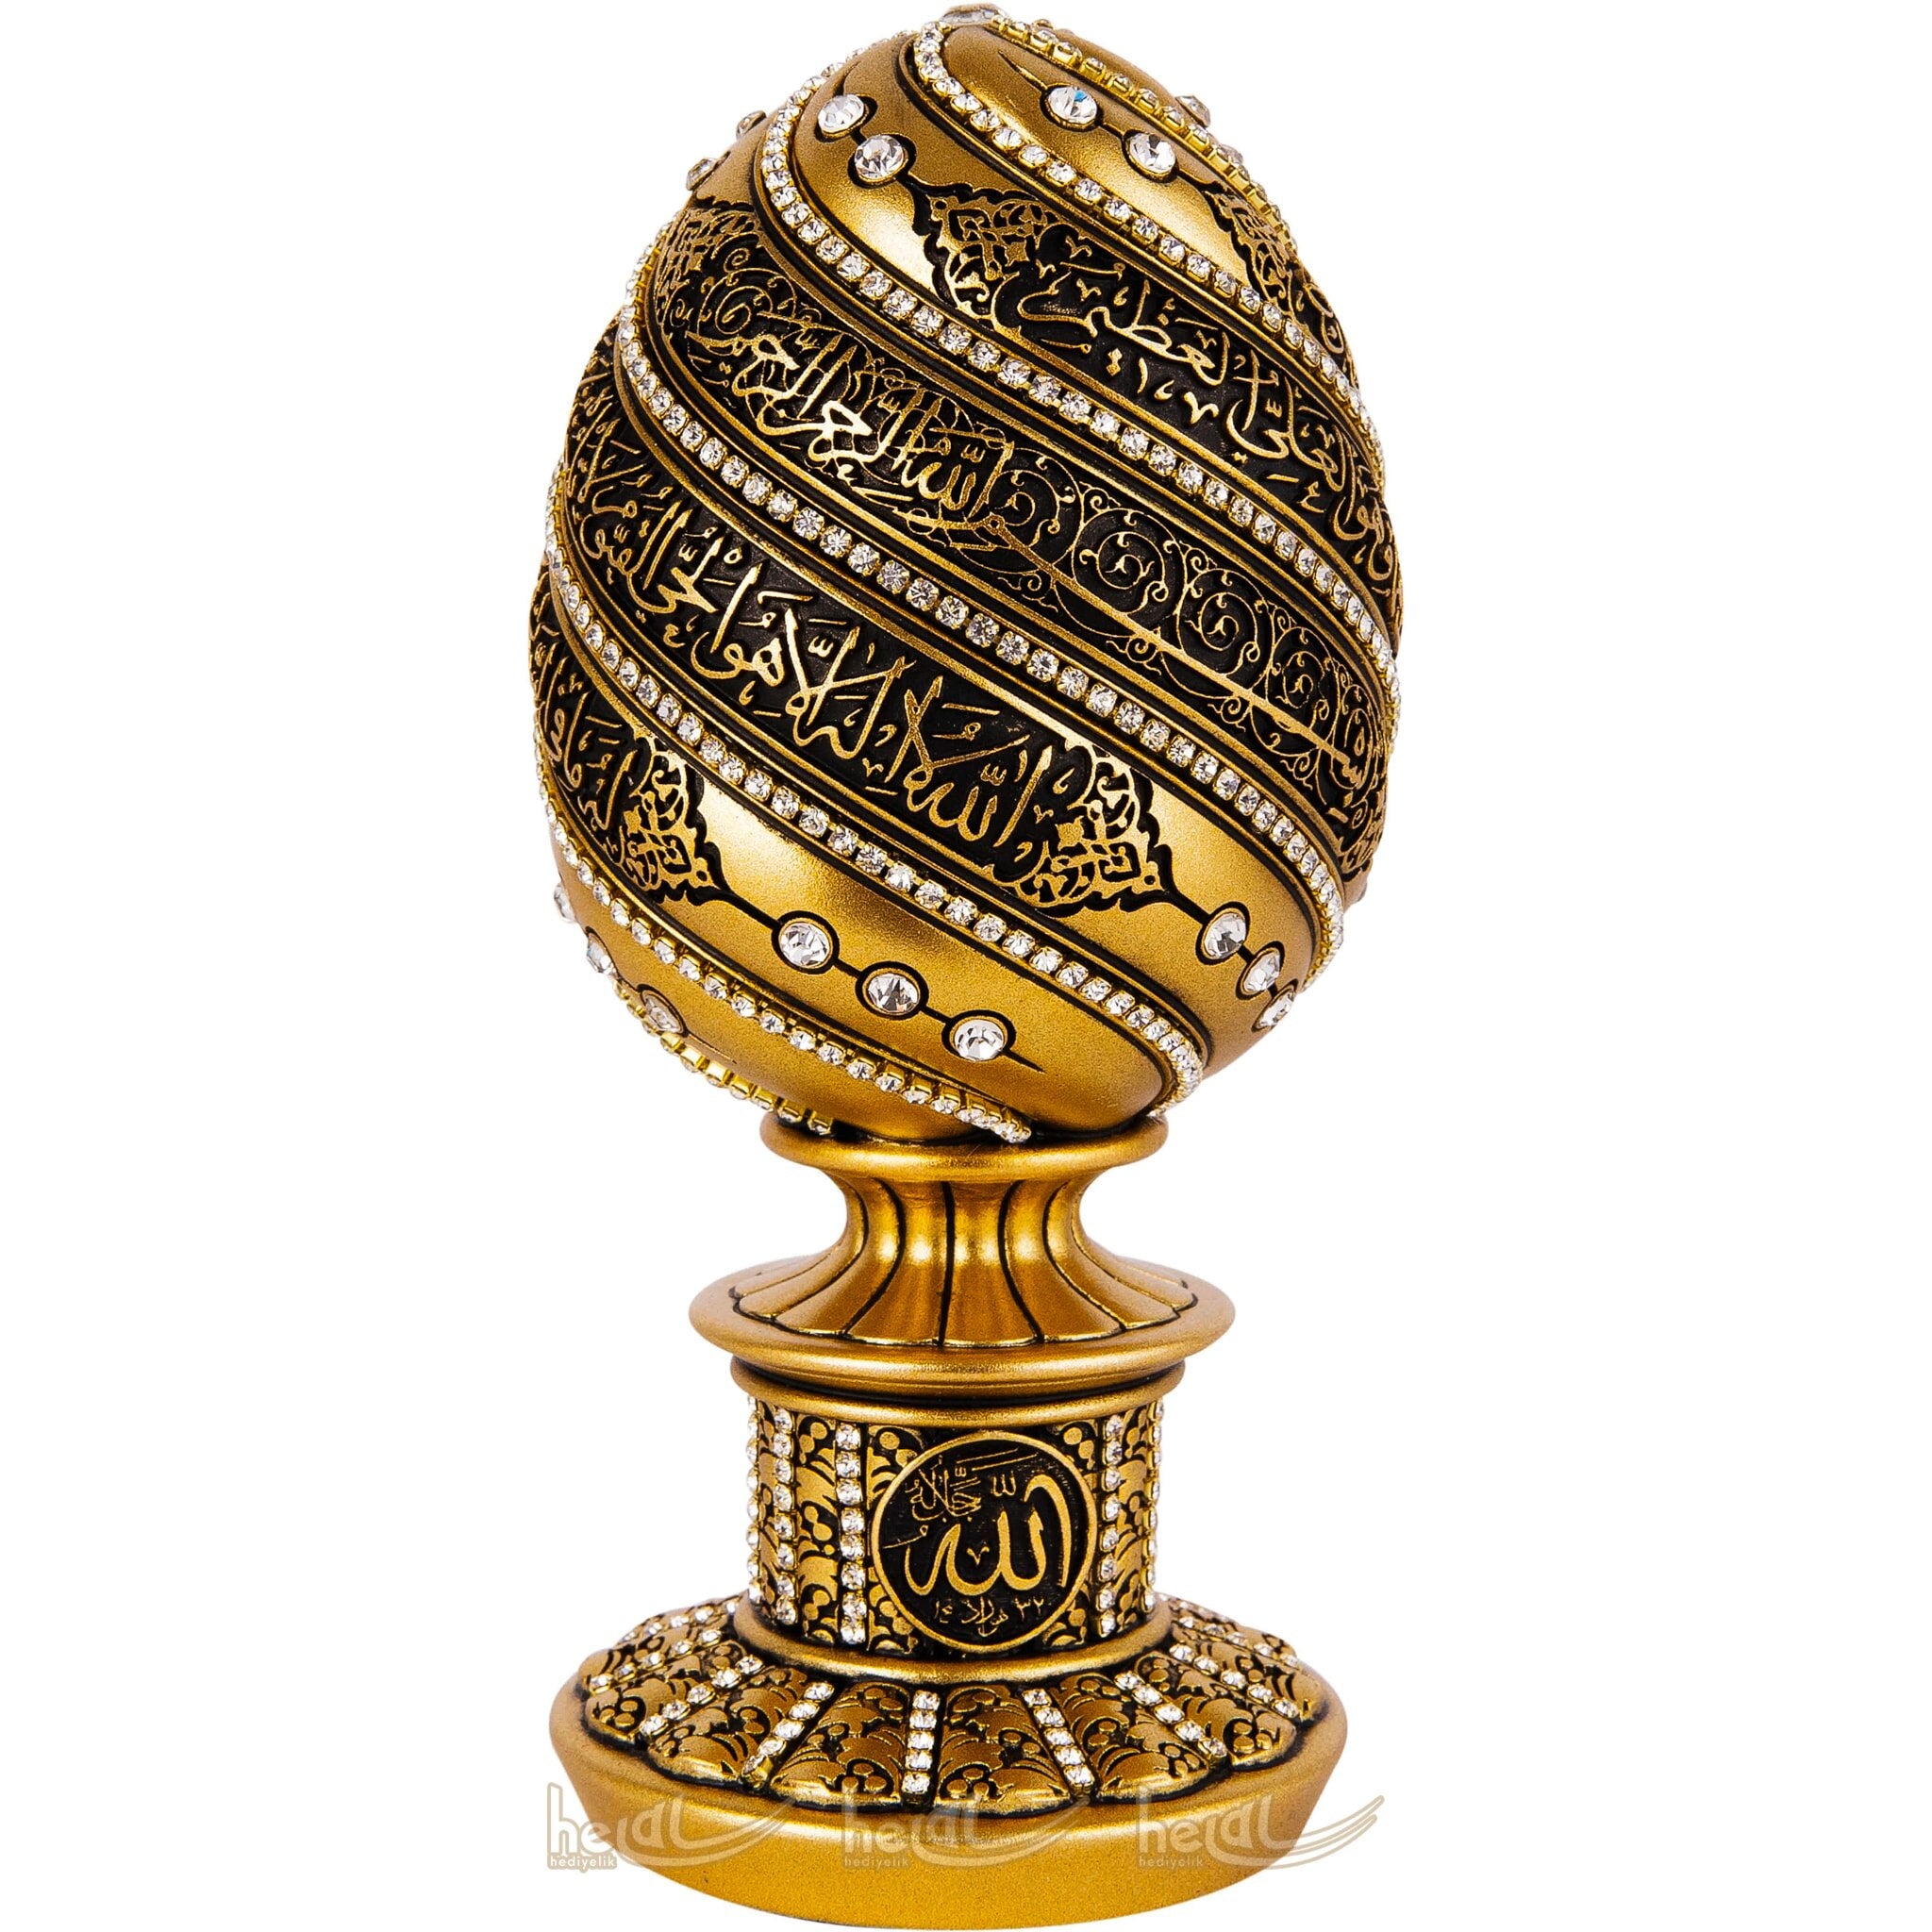 Ramadan Islamic Gift Trinket Ayatul Kursi Knickknack Muslim Arabic Home Decorations Eid Decor Allah Quran Verse Crystal Egg